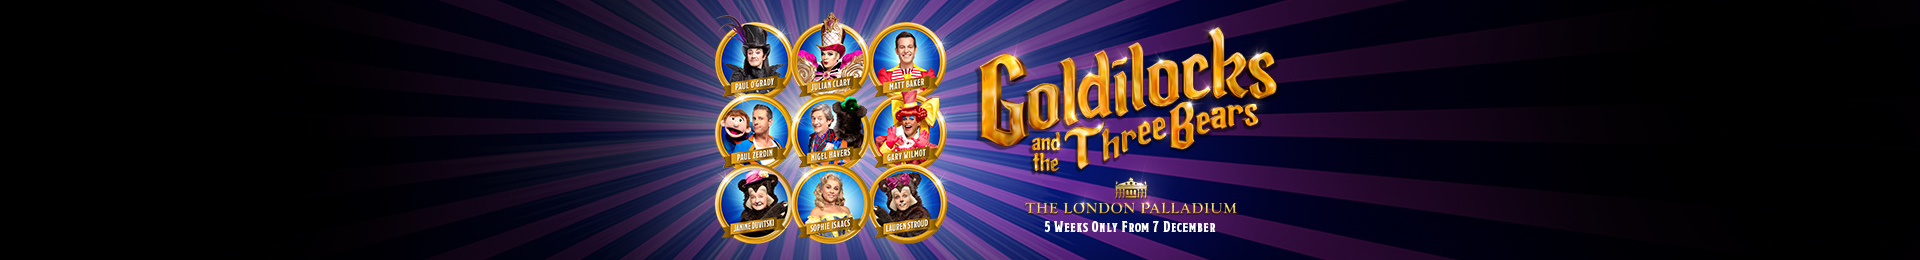 Goldilocks and the Three Bears banner image